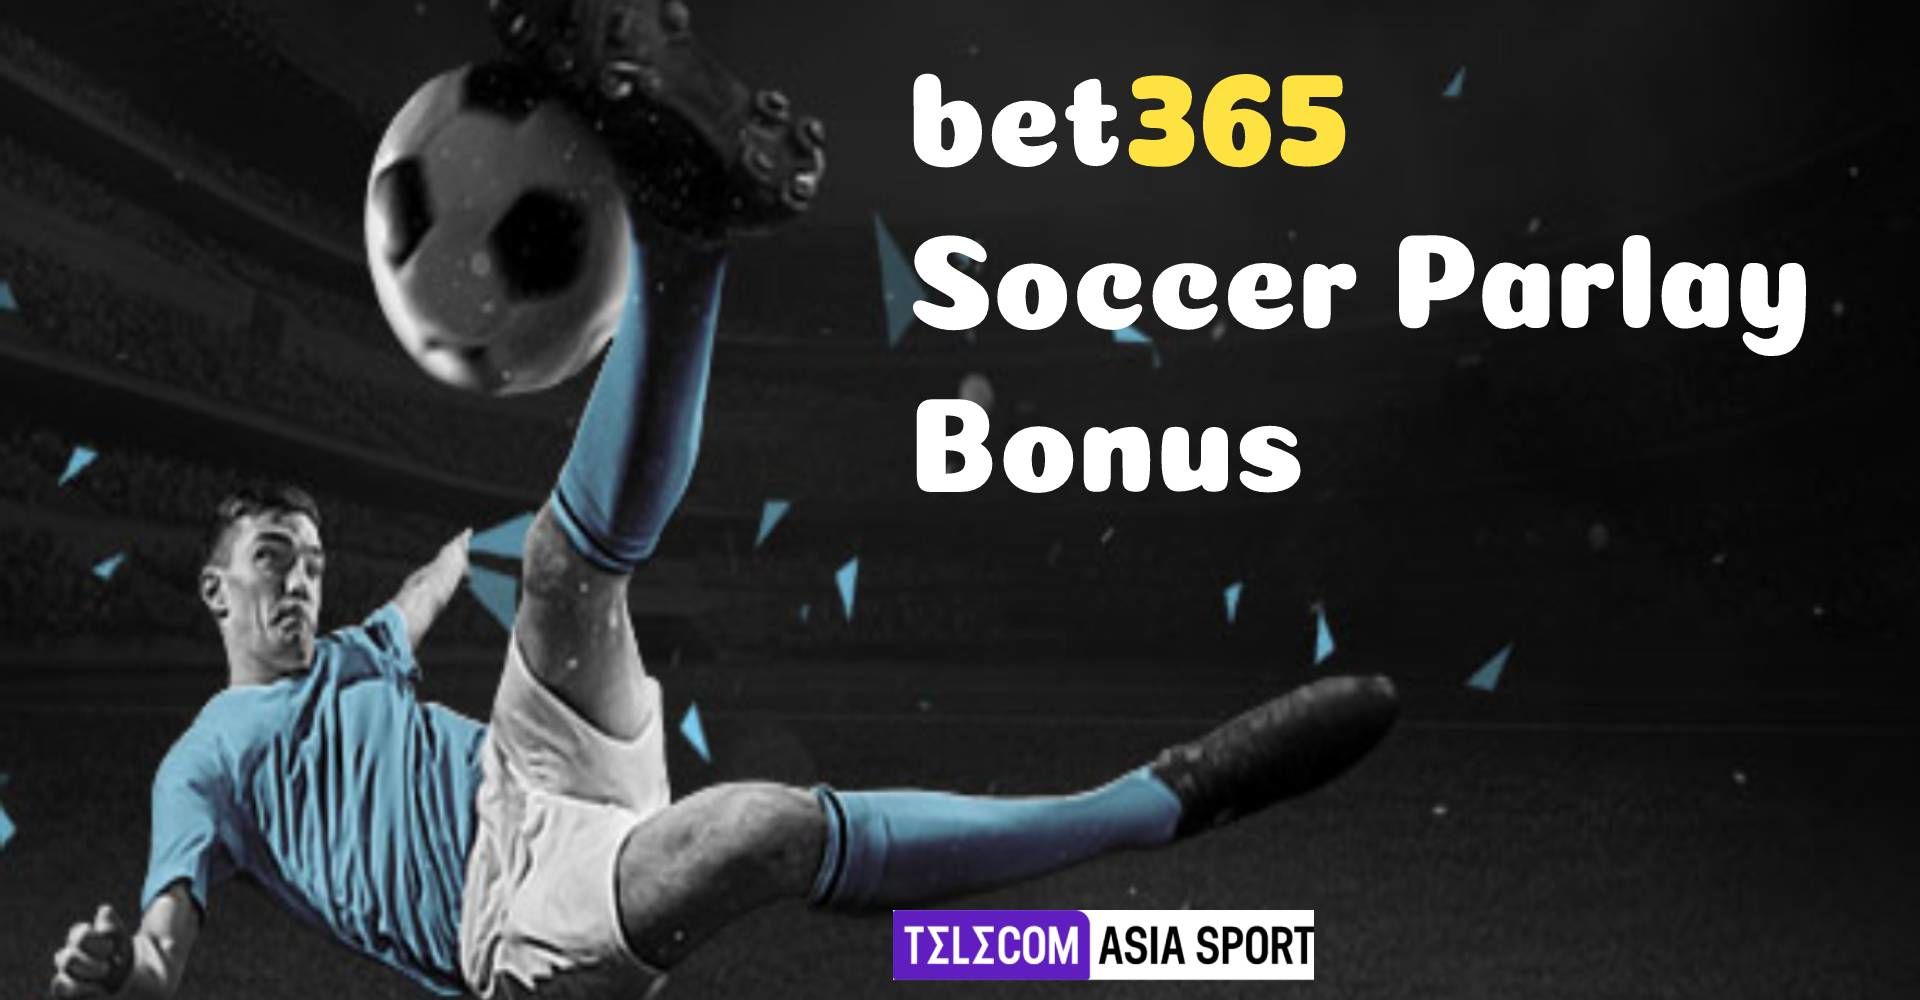 Bet365 Soccer Parley Bonus